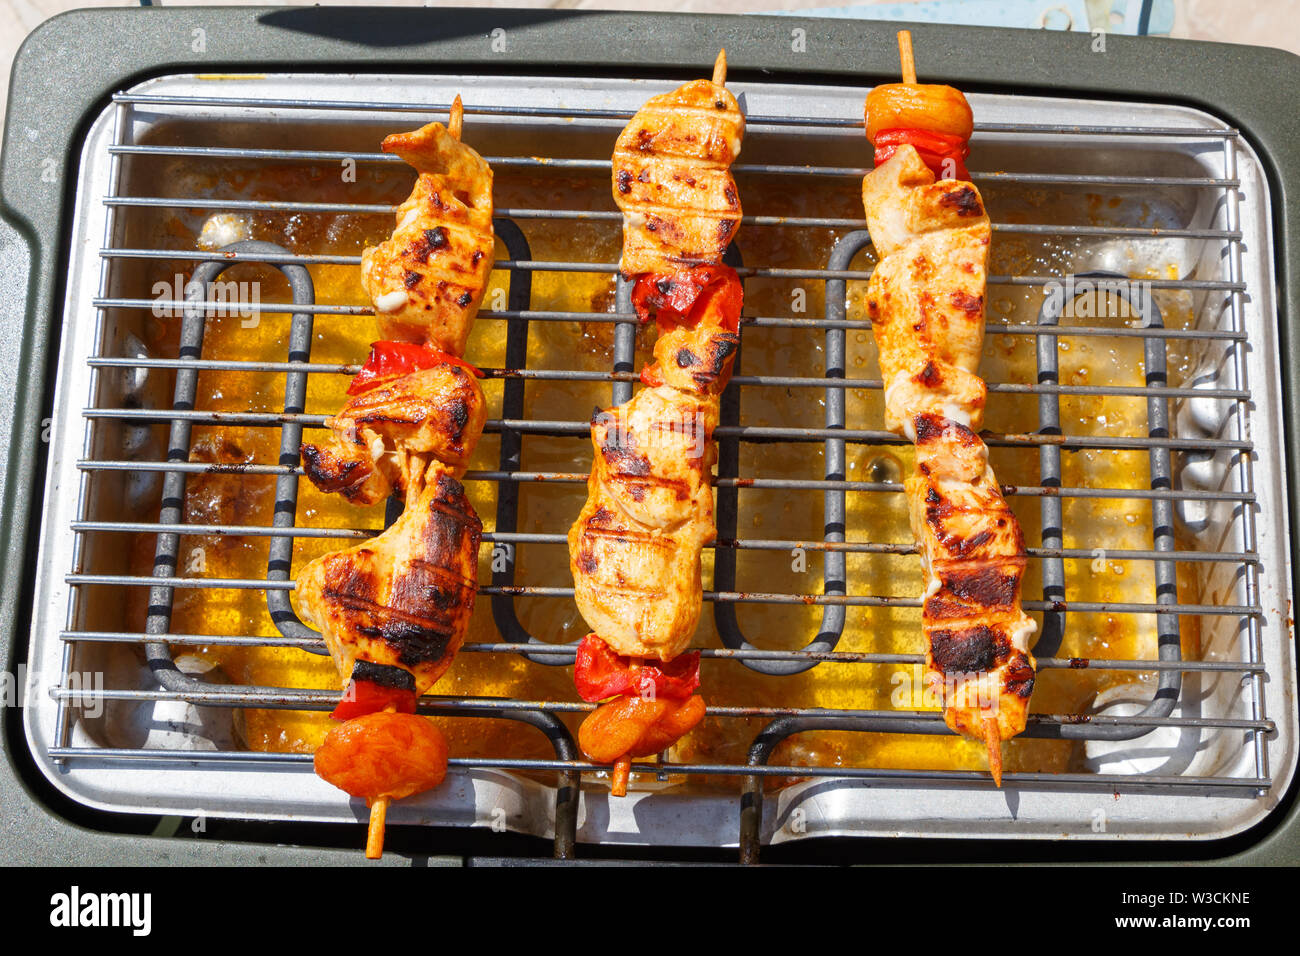 https://c8.alamy.com/comp/W3CKNE/three-marinated-chicken-brochette-on-the-grid-of-an-electric-barbecue-W3CKNE.jpg